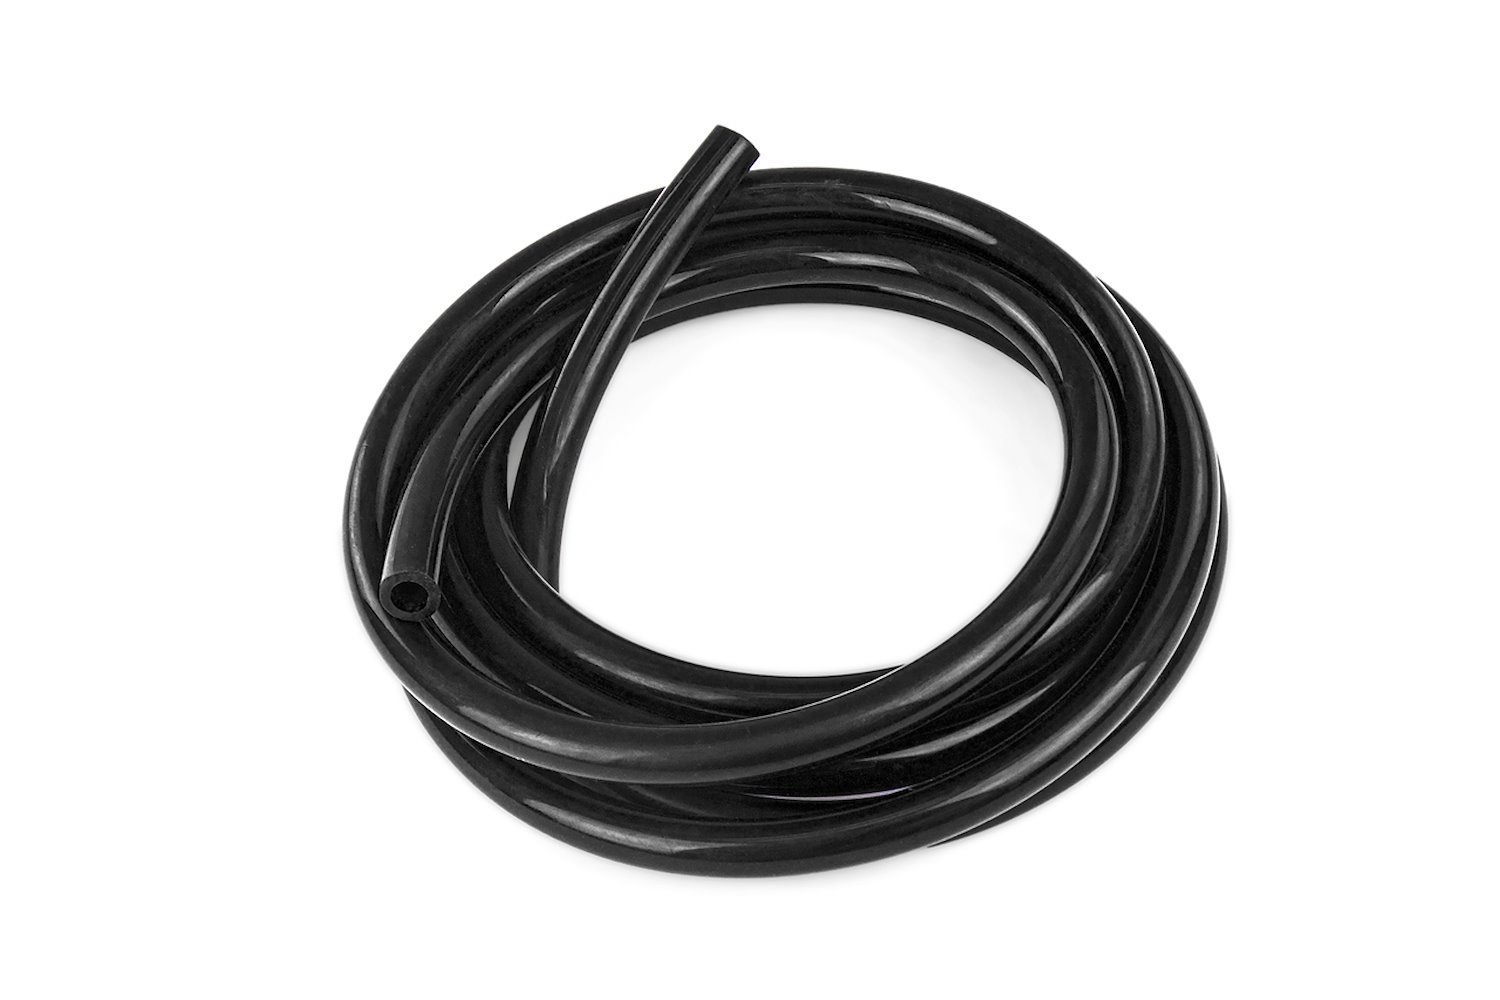 HTSVH5-BLKx10 High-Temperature Silicone Vacuum Hose Tubing, 13/64 in. ID, 10 ft. Roll, Black